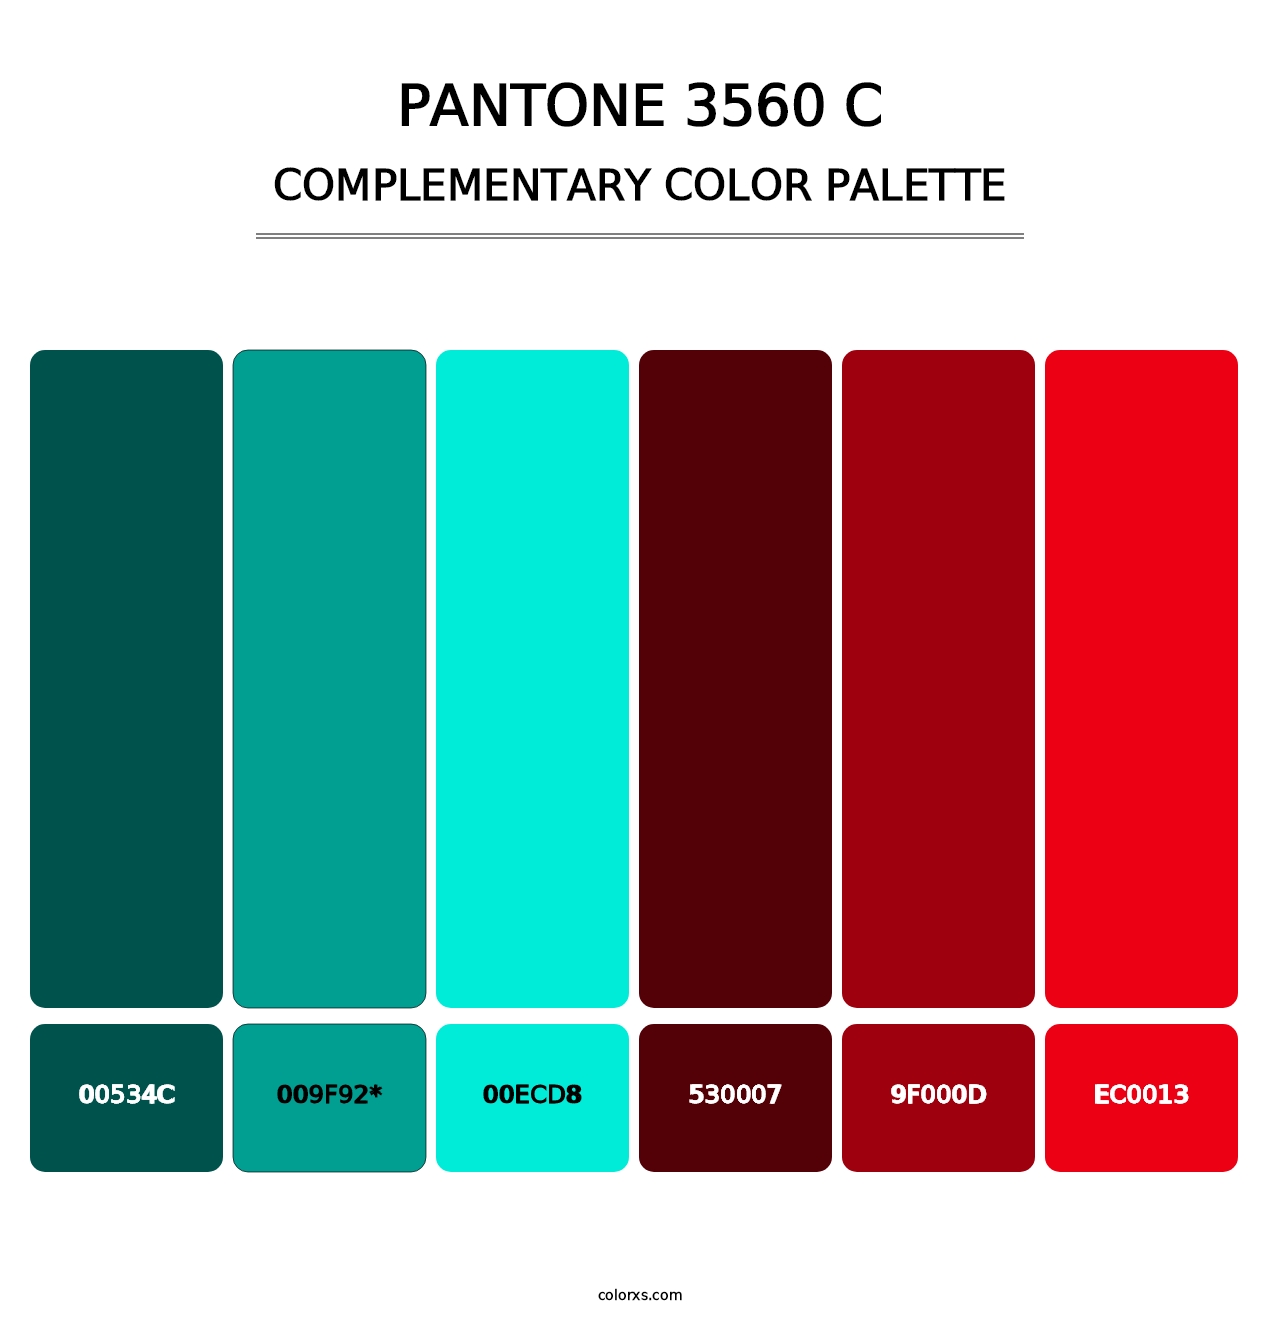 PANTONE 3560 C - Complementary Color Palette